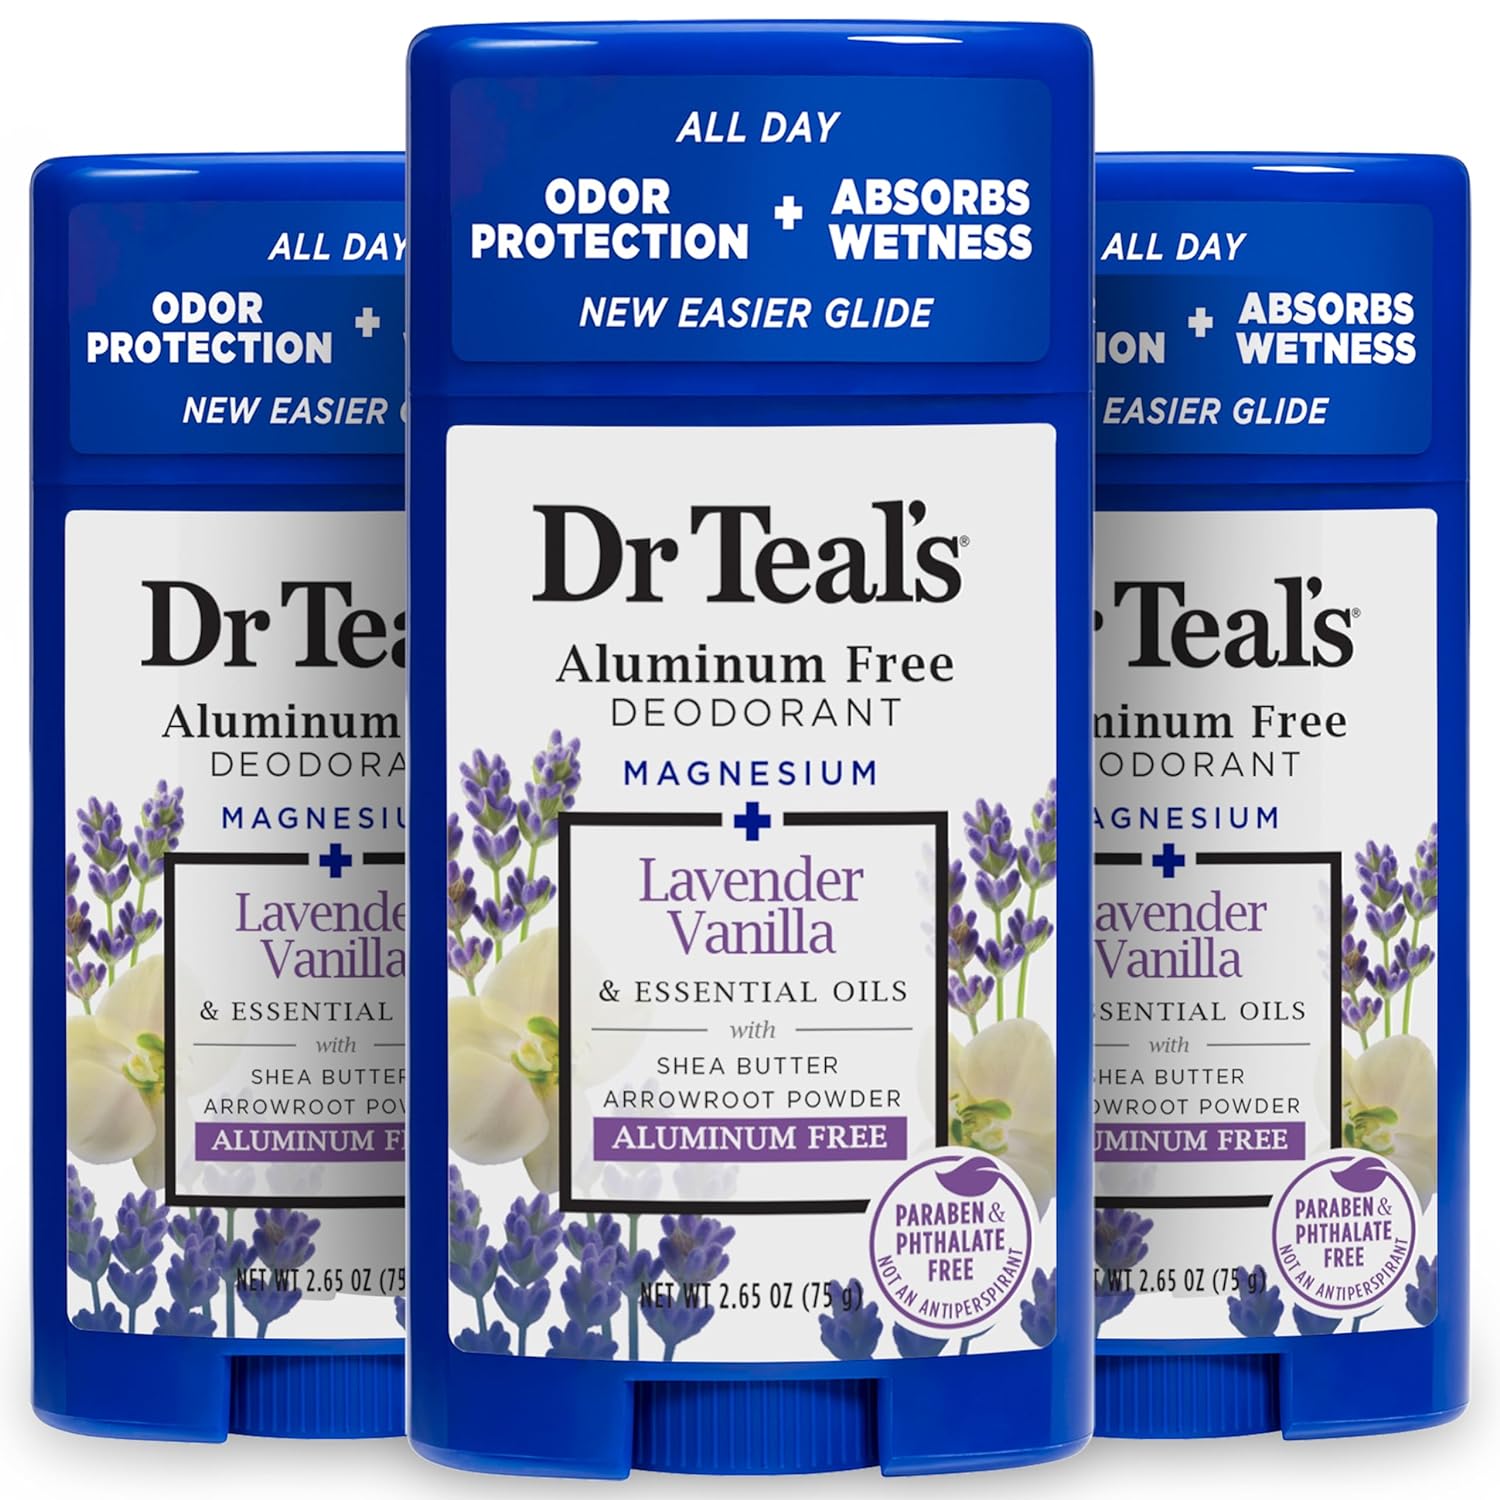 Dr Teal's Aluminum Free Deodorant, Lavender Vanilla with Essential Oils, 2.65 oz (Pack of 3)